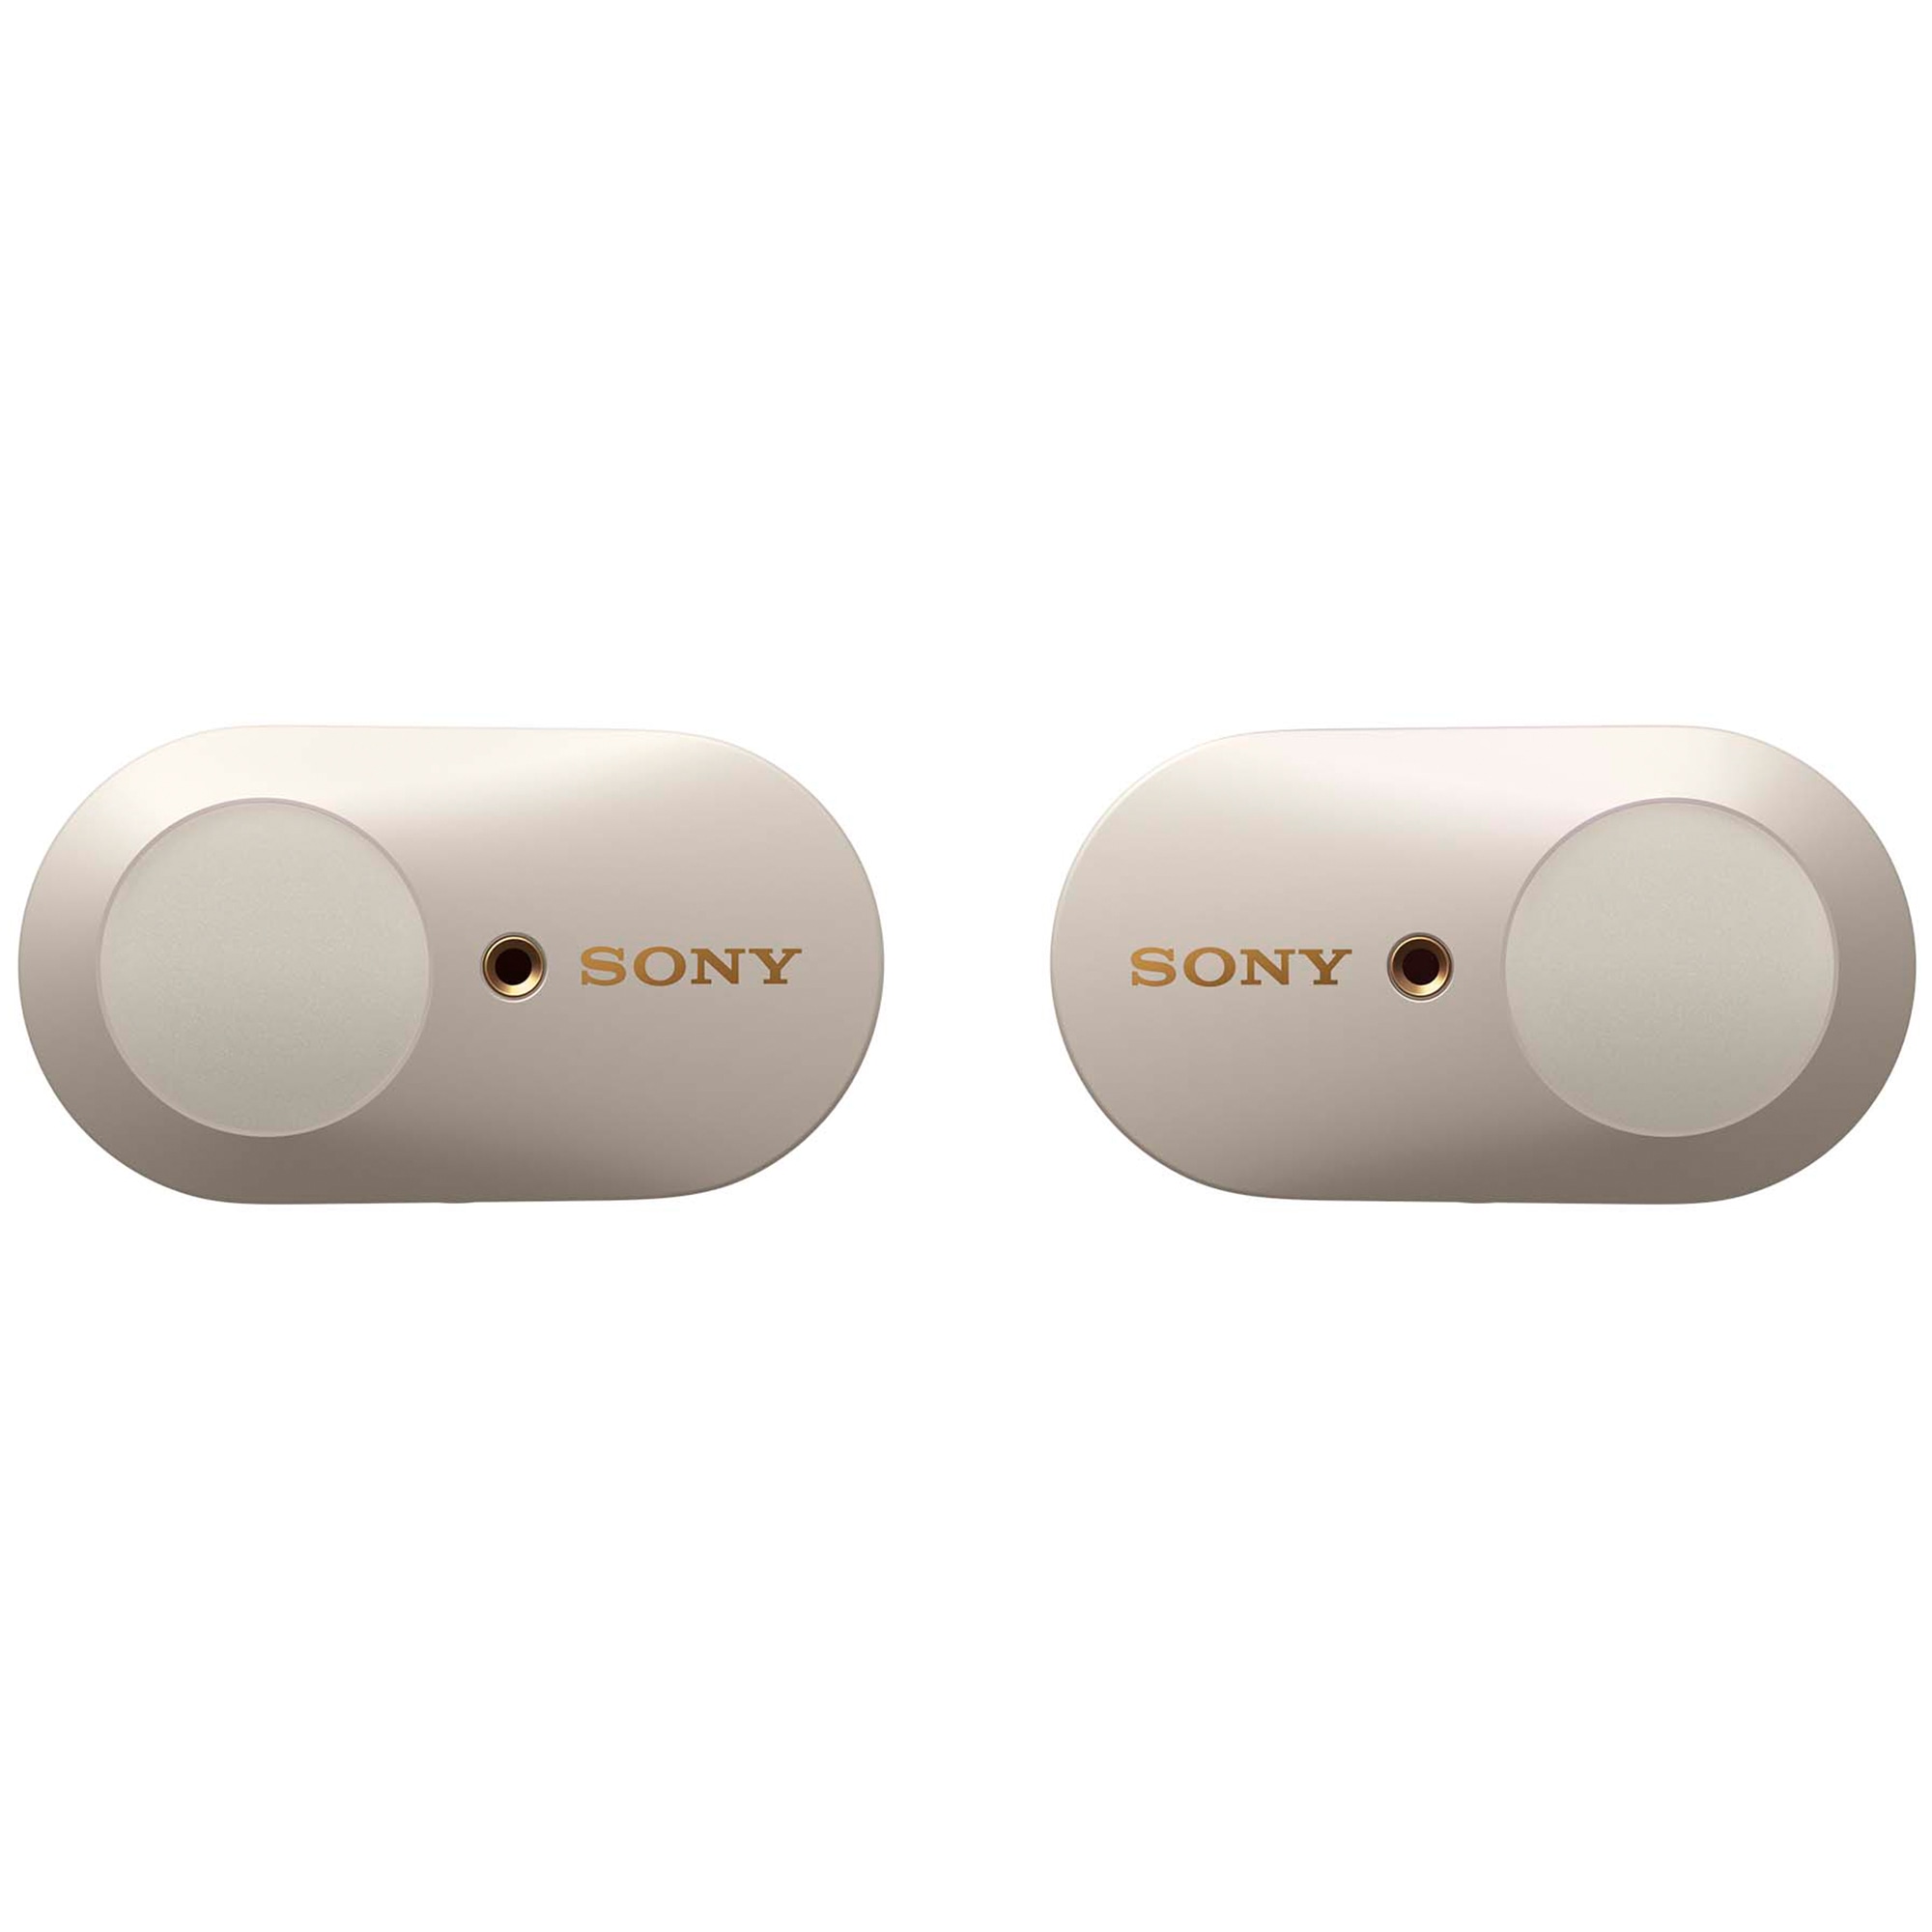 Sony Wf 1000xm3 True Wireless Noise Cancelling In Ear Headphones White Pcrichard Com Wf1000xm3 S